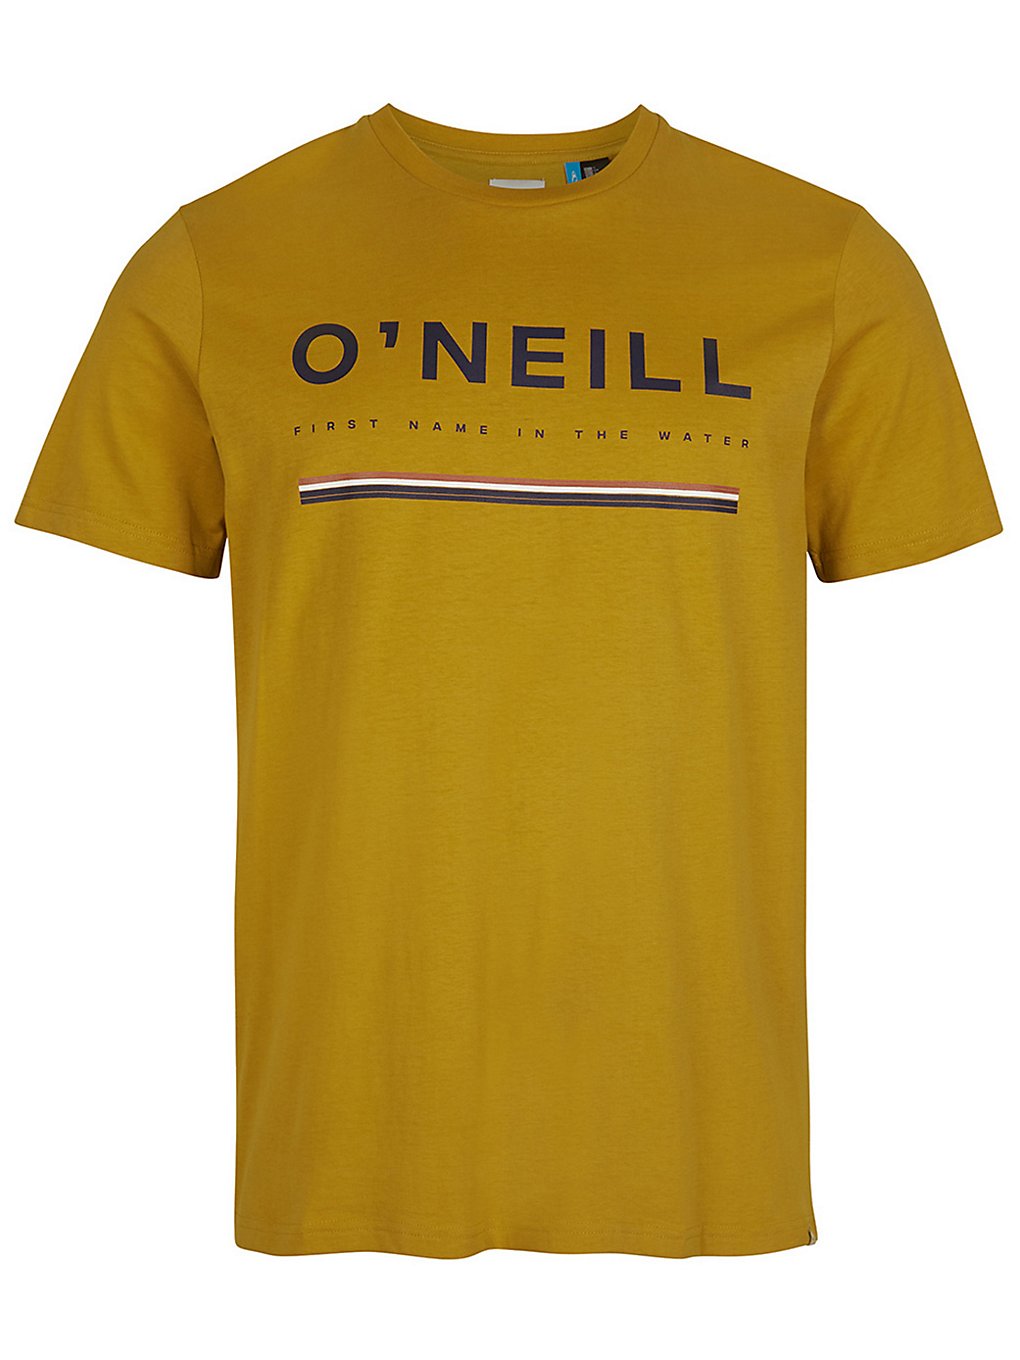 O'Neill Arrowhead T-Shirt harvest gold